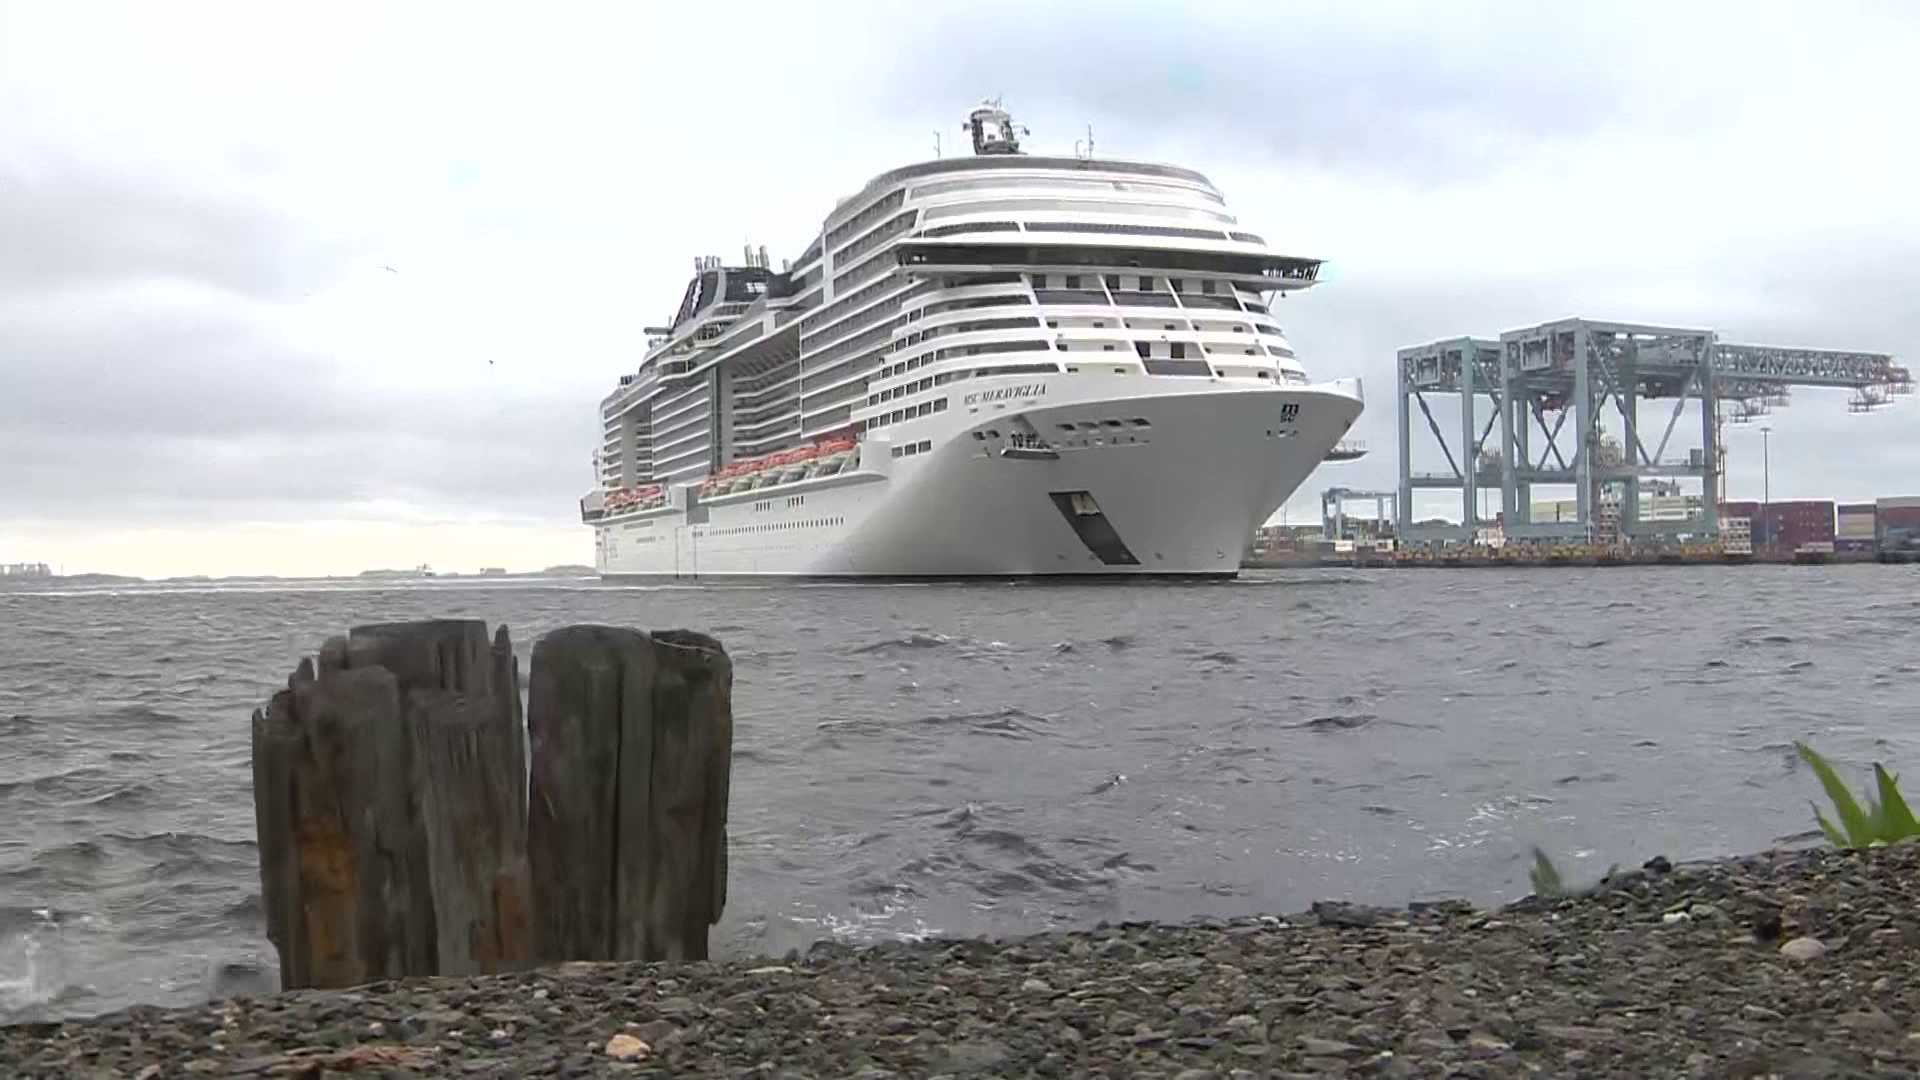 Massive cruise ship arrives in Boston